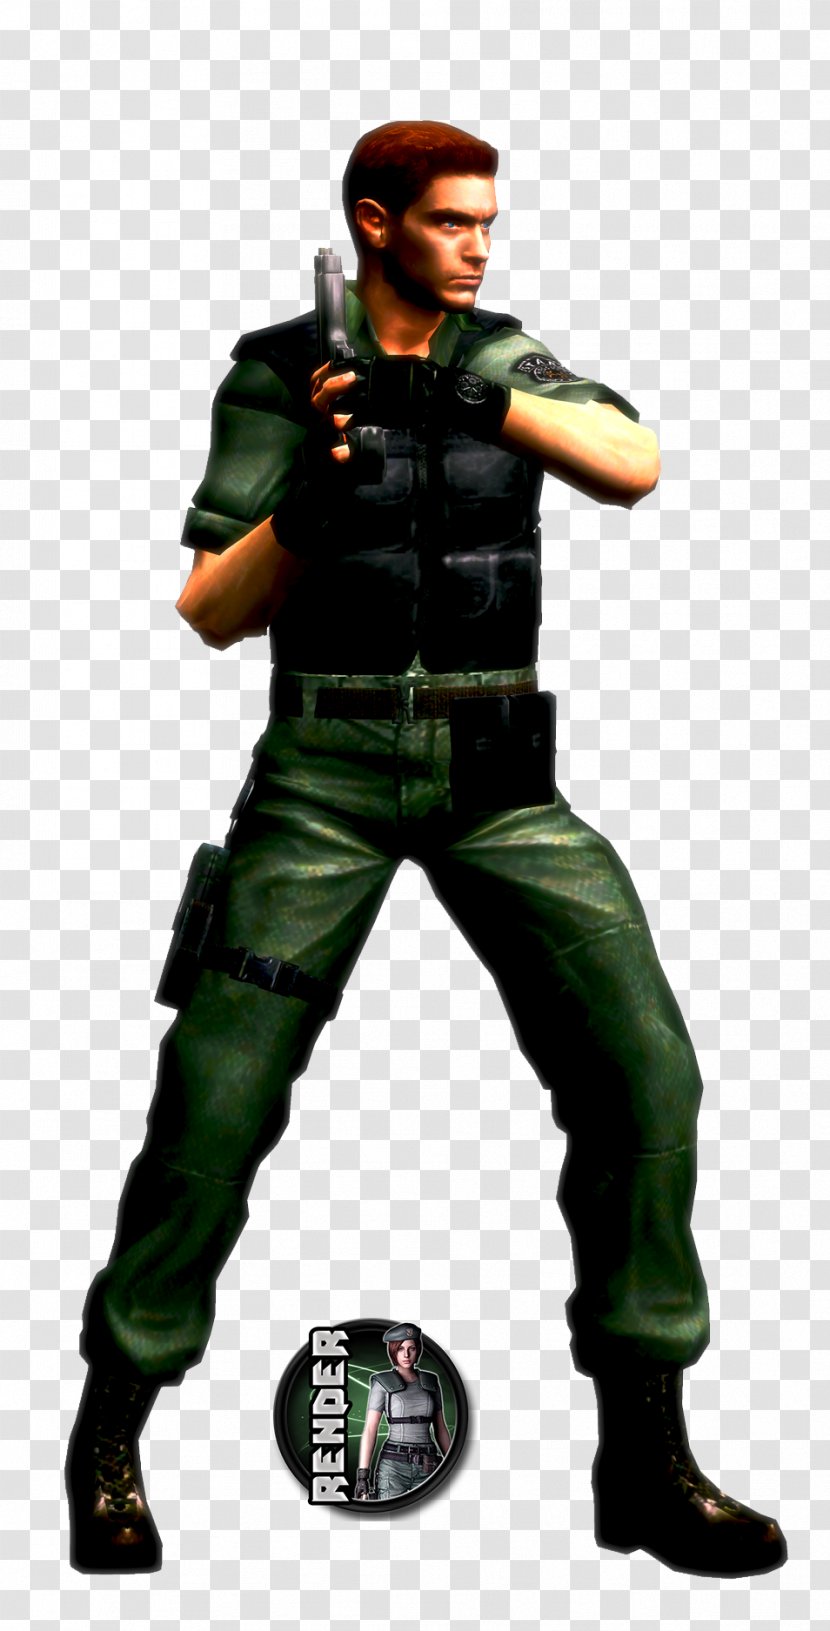 Metal Gear Solid V: The Phantom Pain Rising: Revengeance Chris Redfield Soldier Mercenary - Rendering Transparent PNG